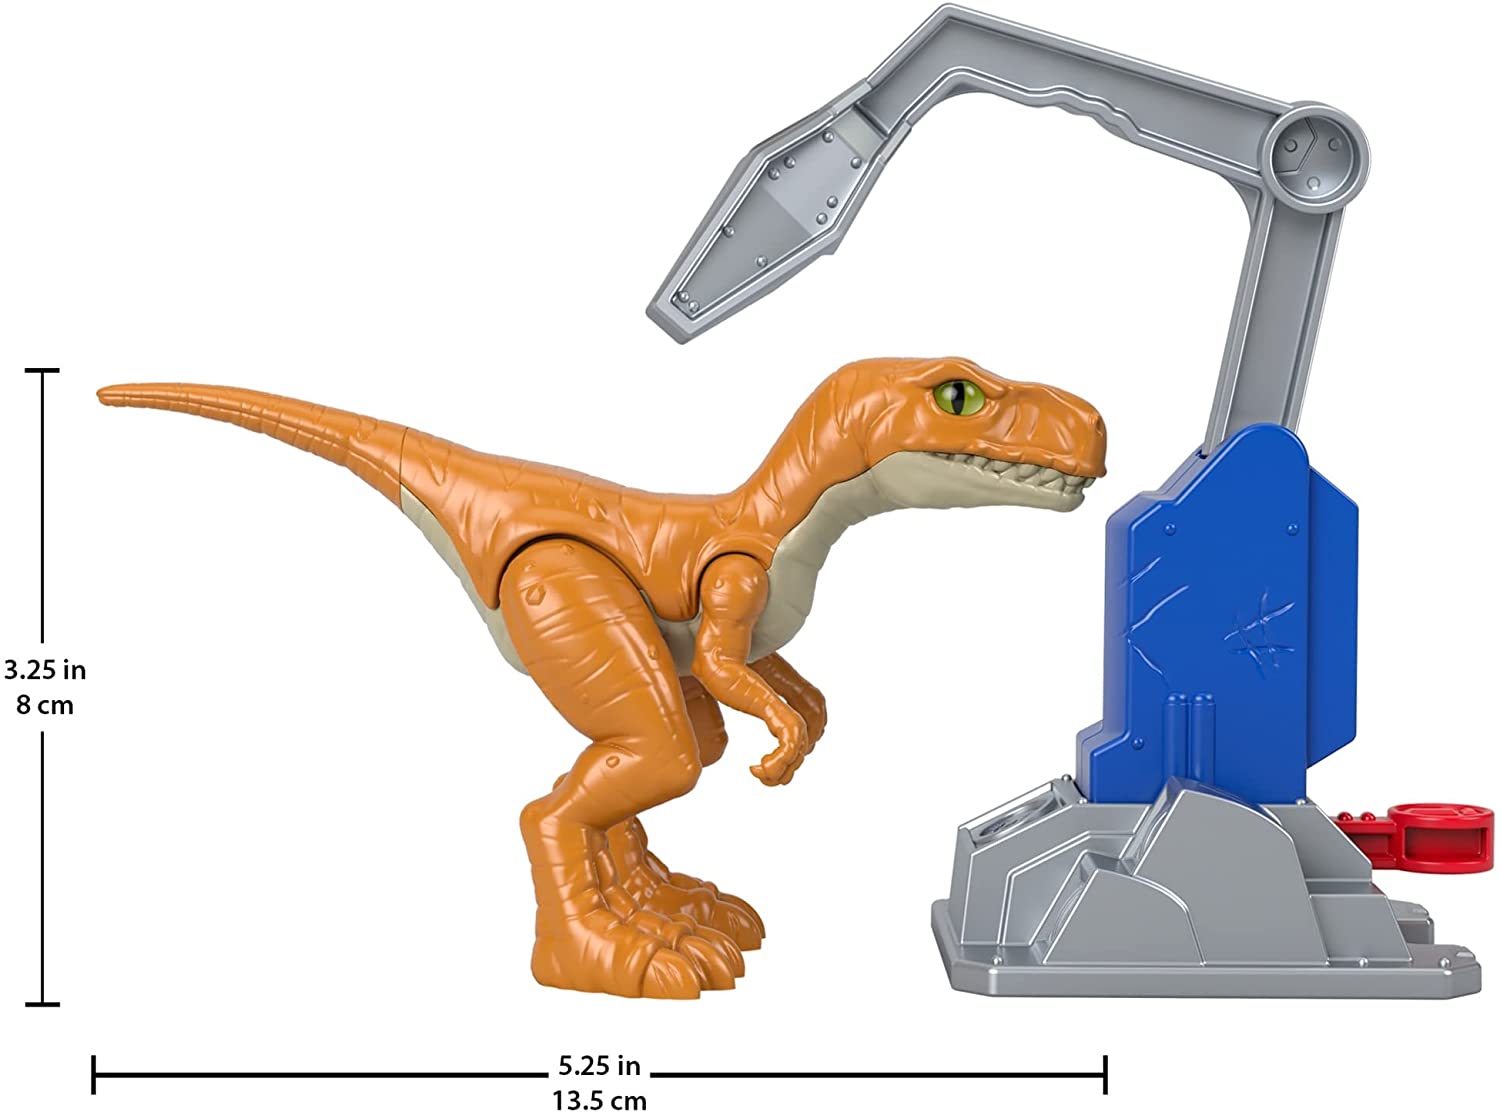 Fisher-Price Imaginext Jurassic World Atrociraptor 'Tiger' Dinosaur Figure